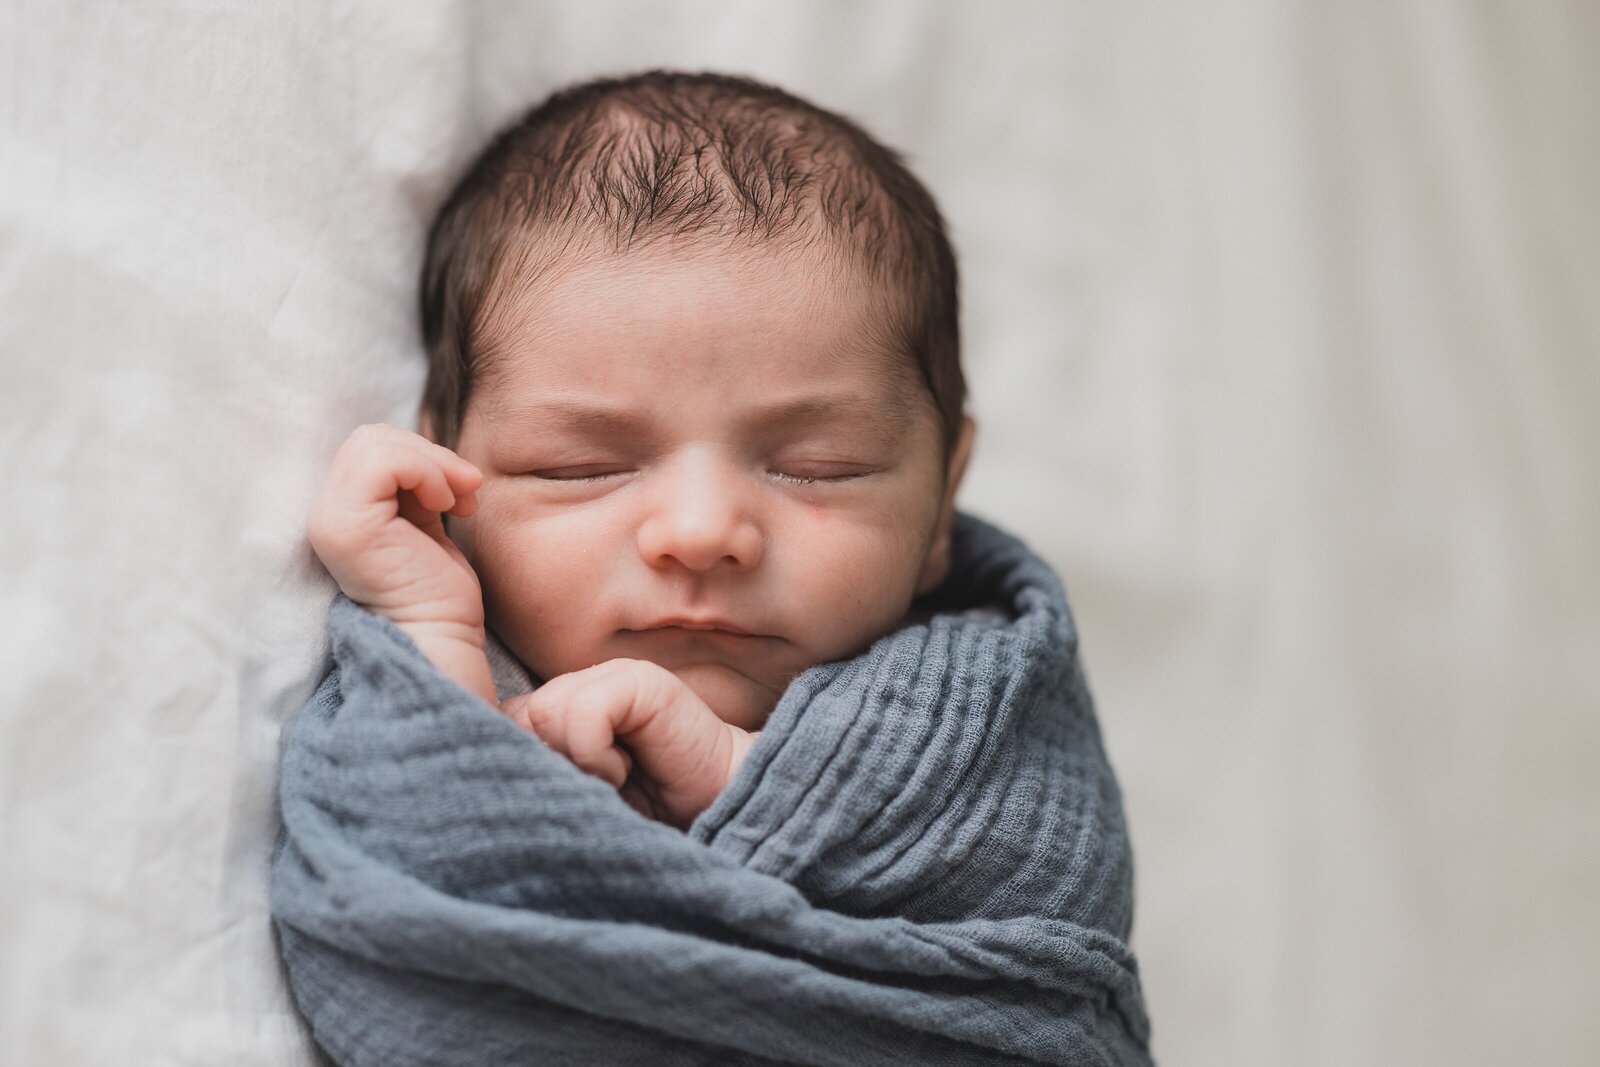 Newborn sleeping pose during Lifestyle newborn photography session by Jennifer Beal